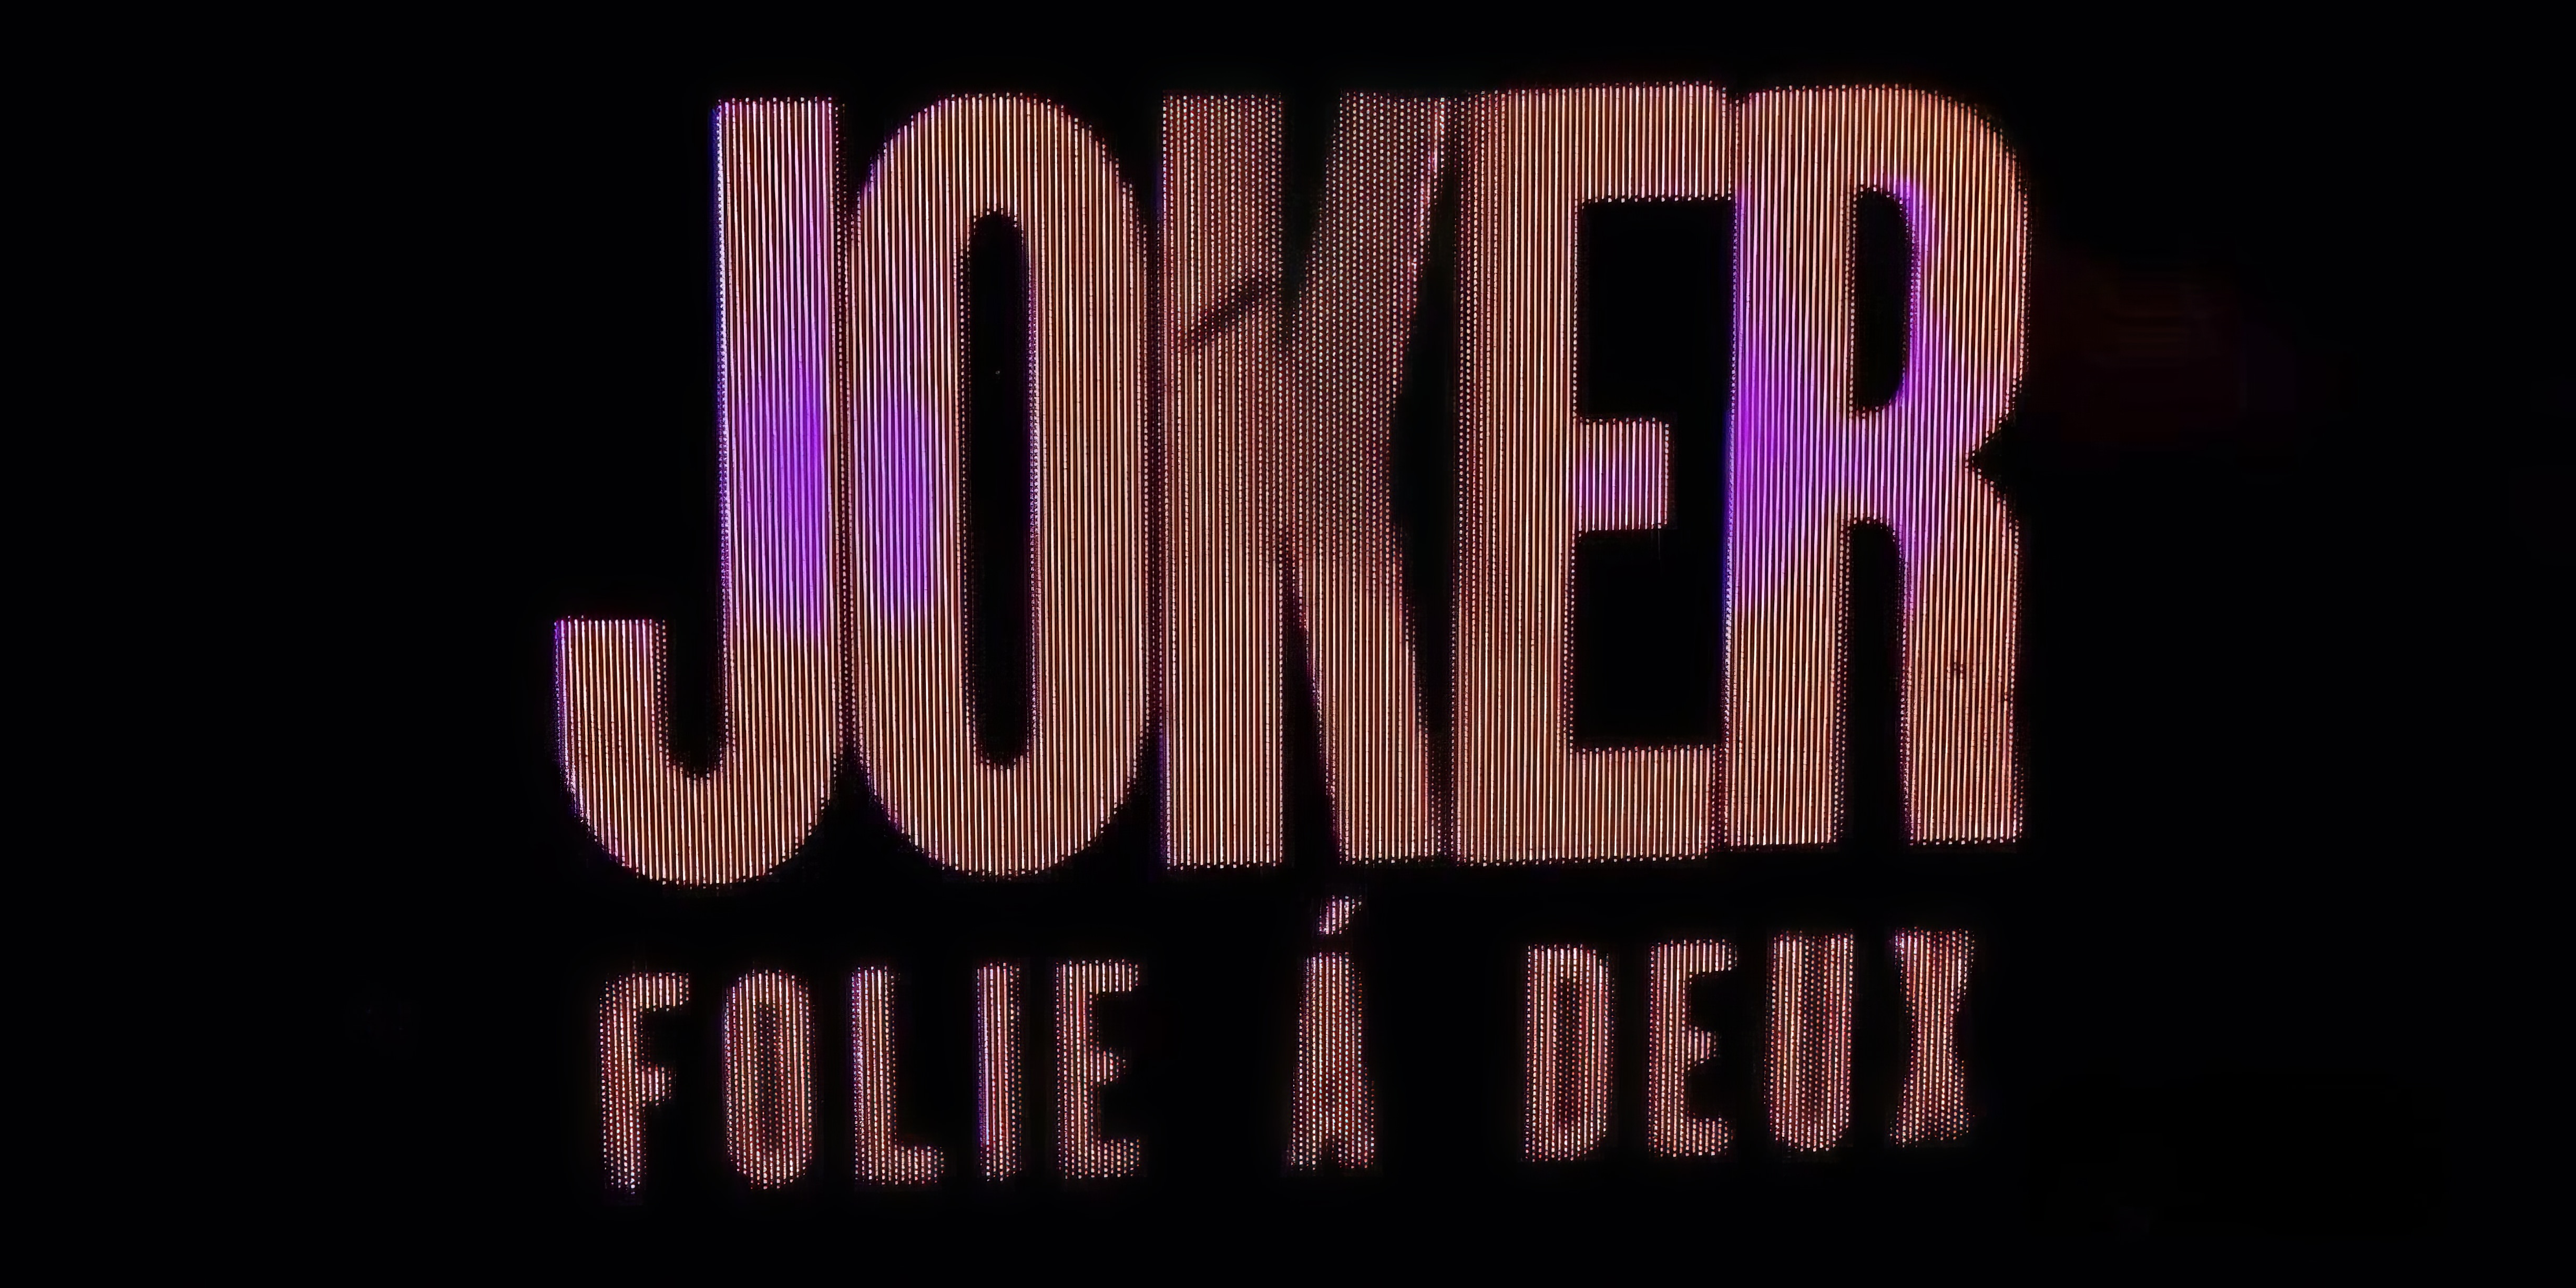 جوکر: Folie à Deux لوگوی رسمی فیلم 